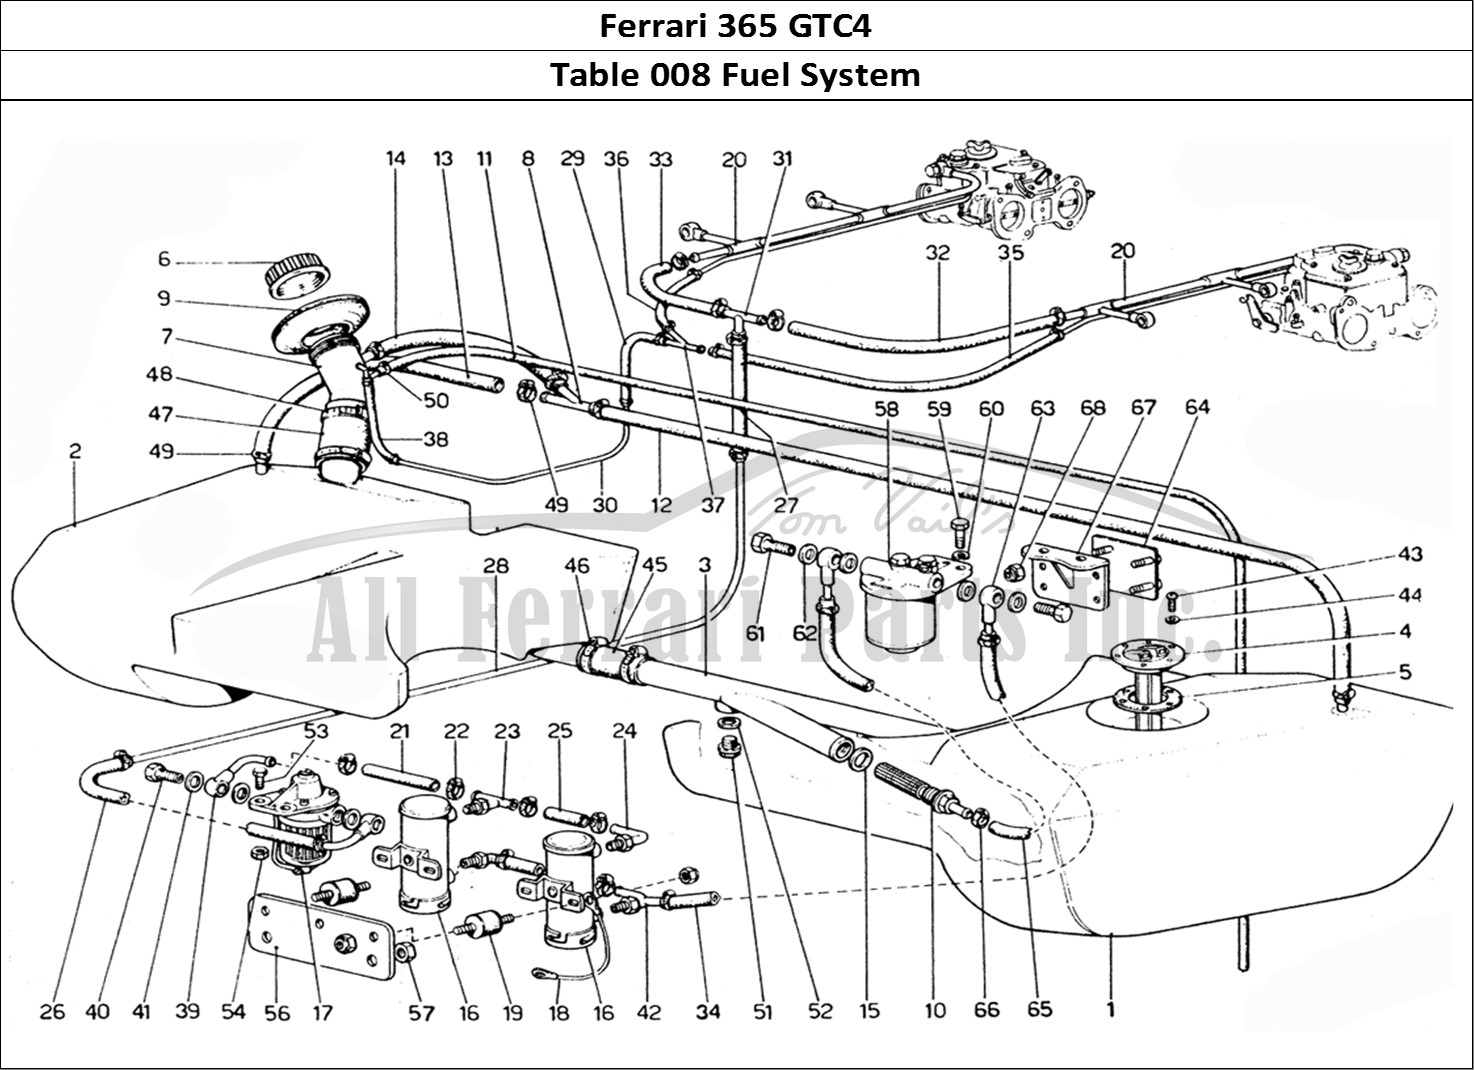 Ferrari Parts Ferrari 365 GTC4 (Mechanical) Page 008 Fuel system